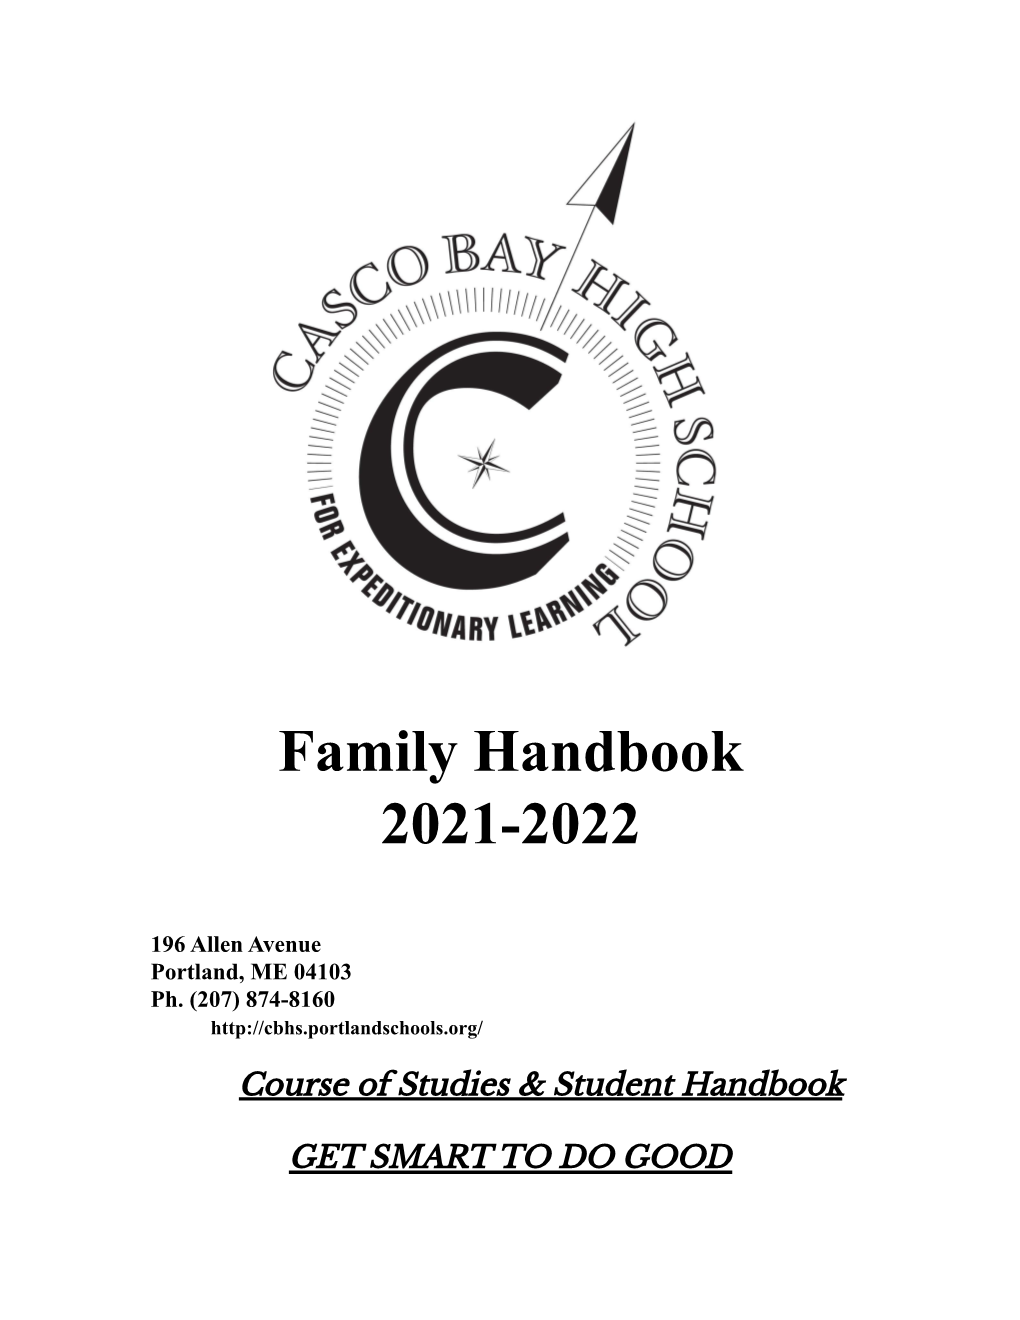 Family Handbook 2021-2022